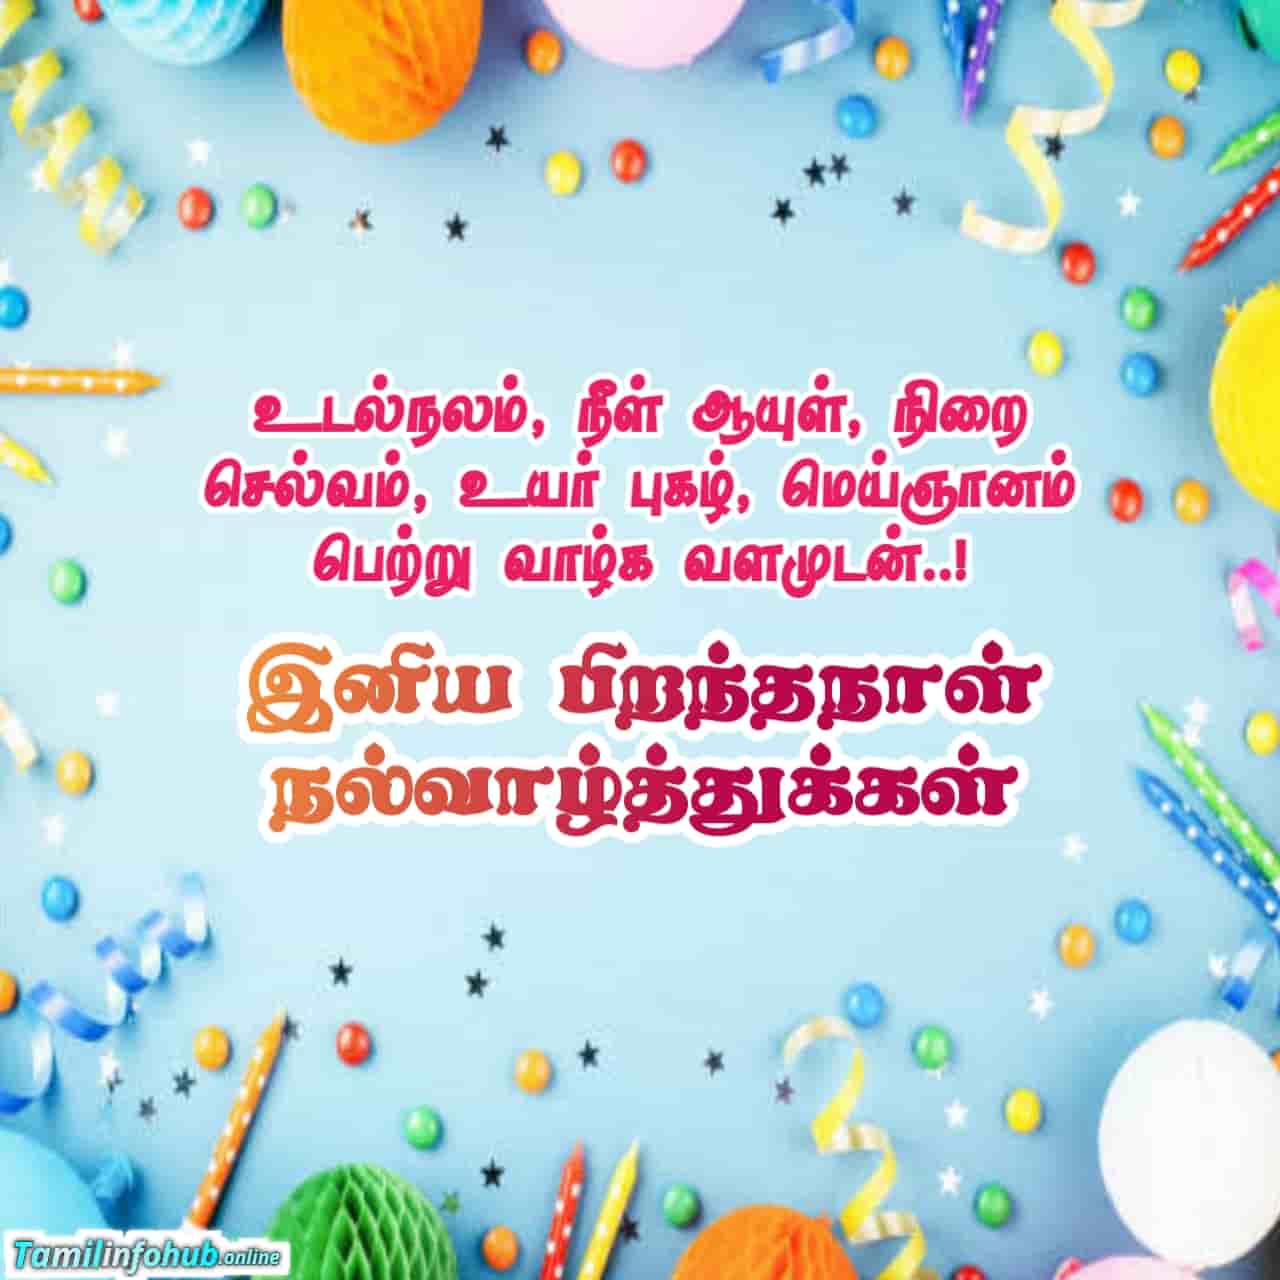 Birthday wishes in Tamil kavithai